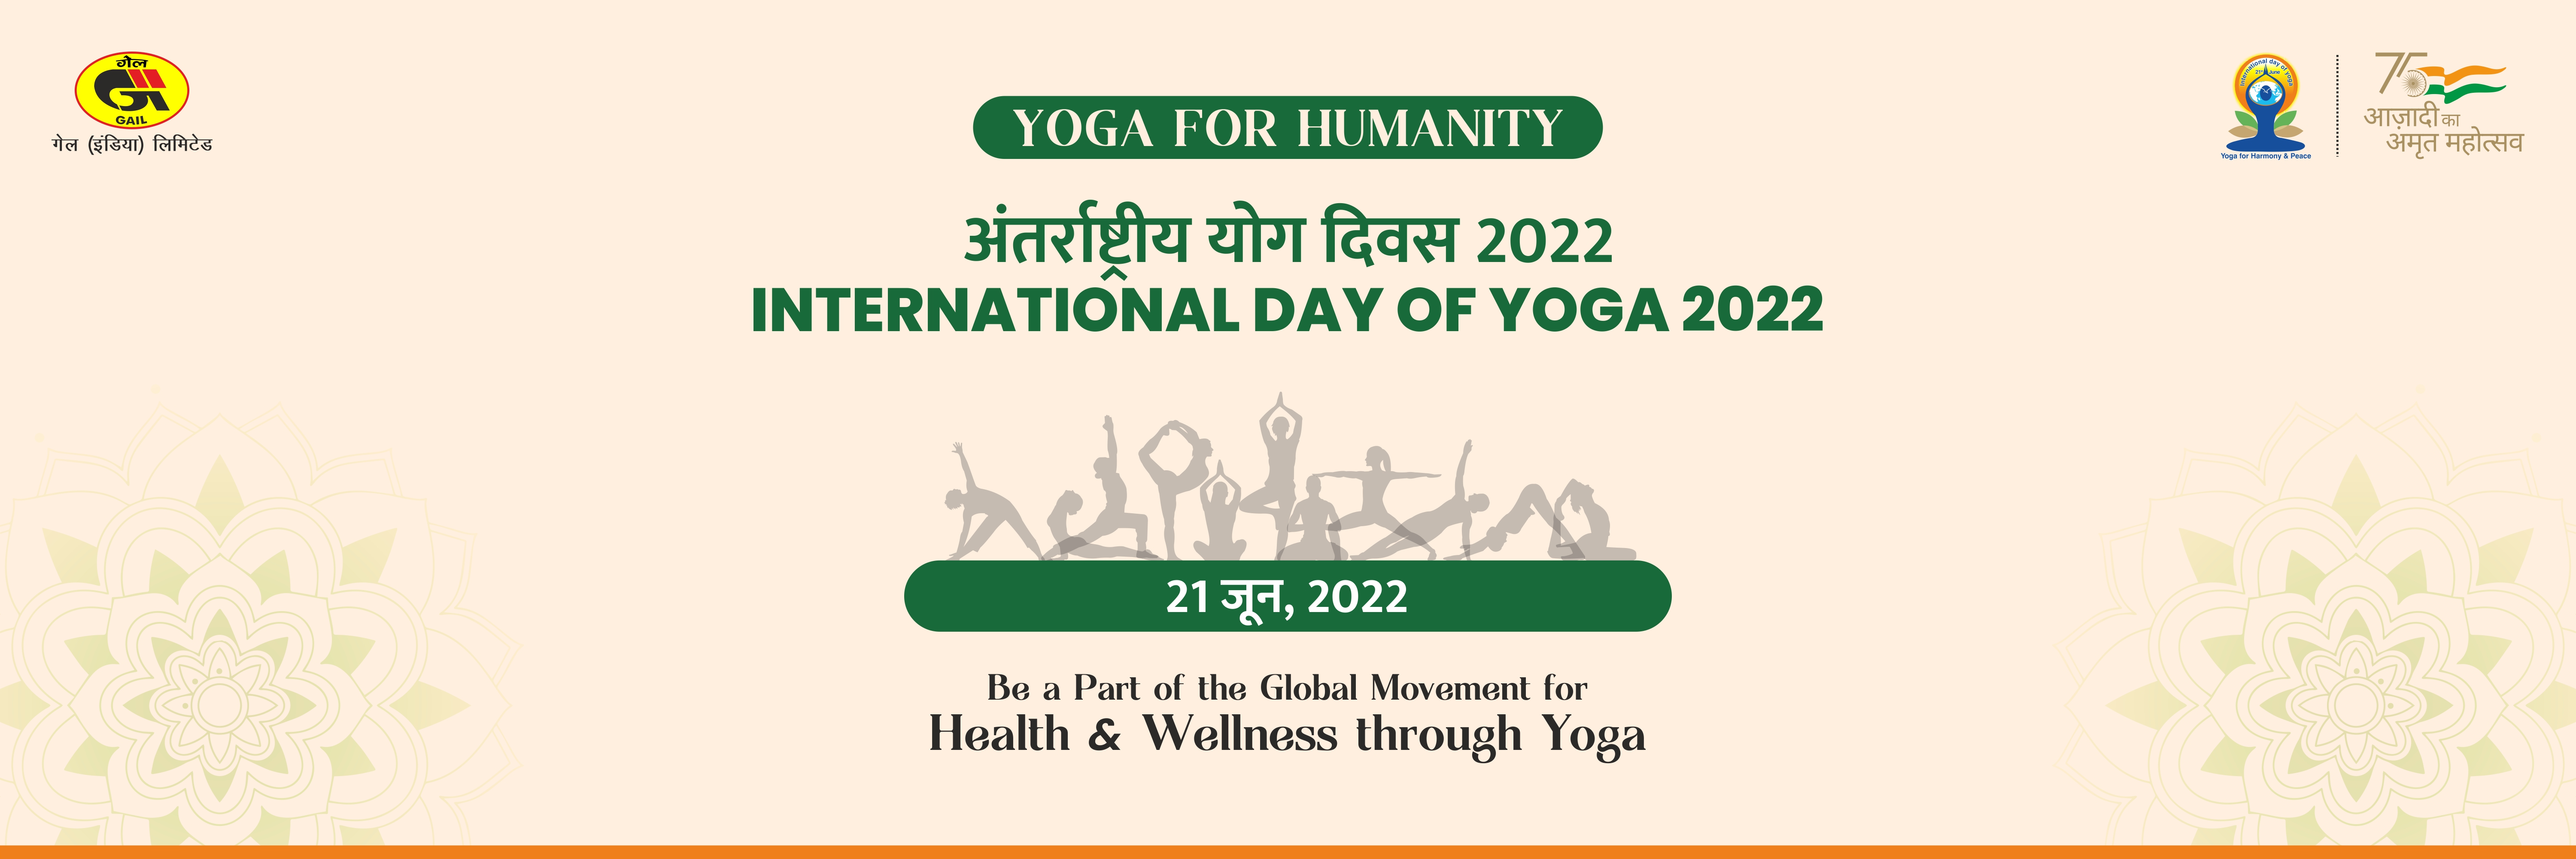 #Yoga_For_Humanity : International Day of Yoga 2022